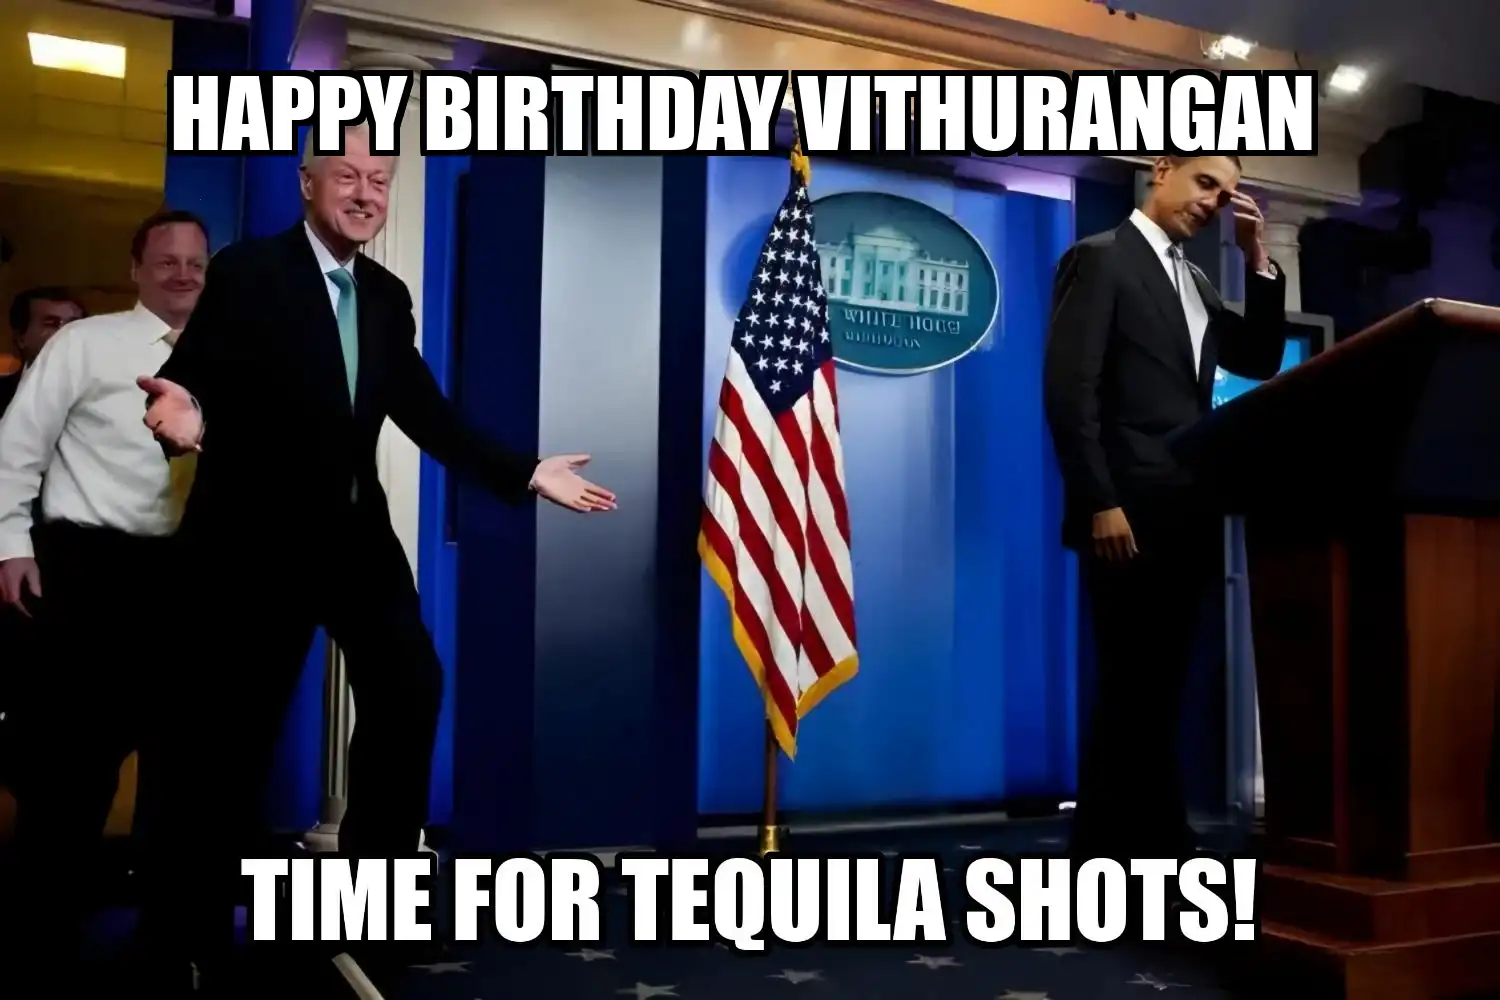 Happy Birthday Vithurangan Time For Tequila Shots Memes